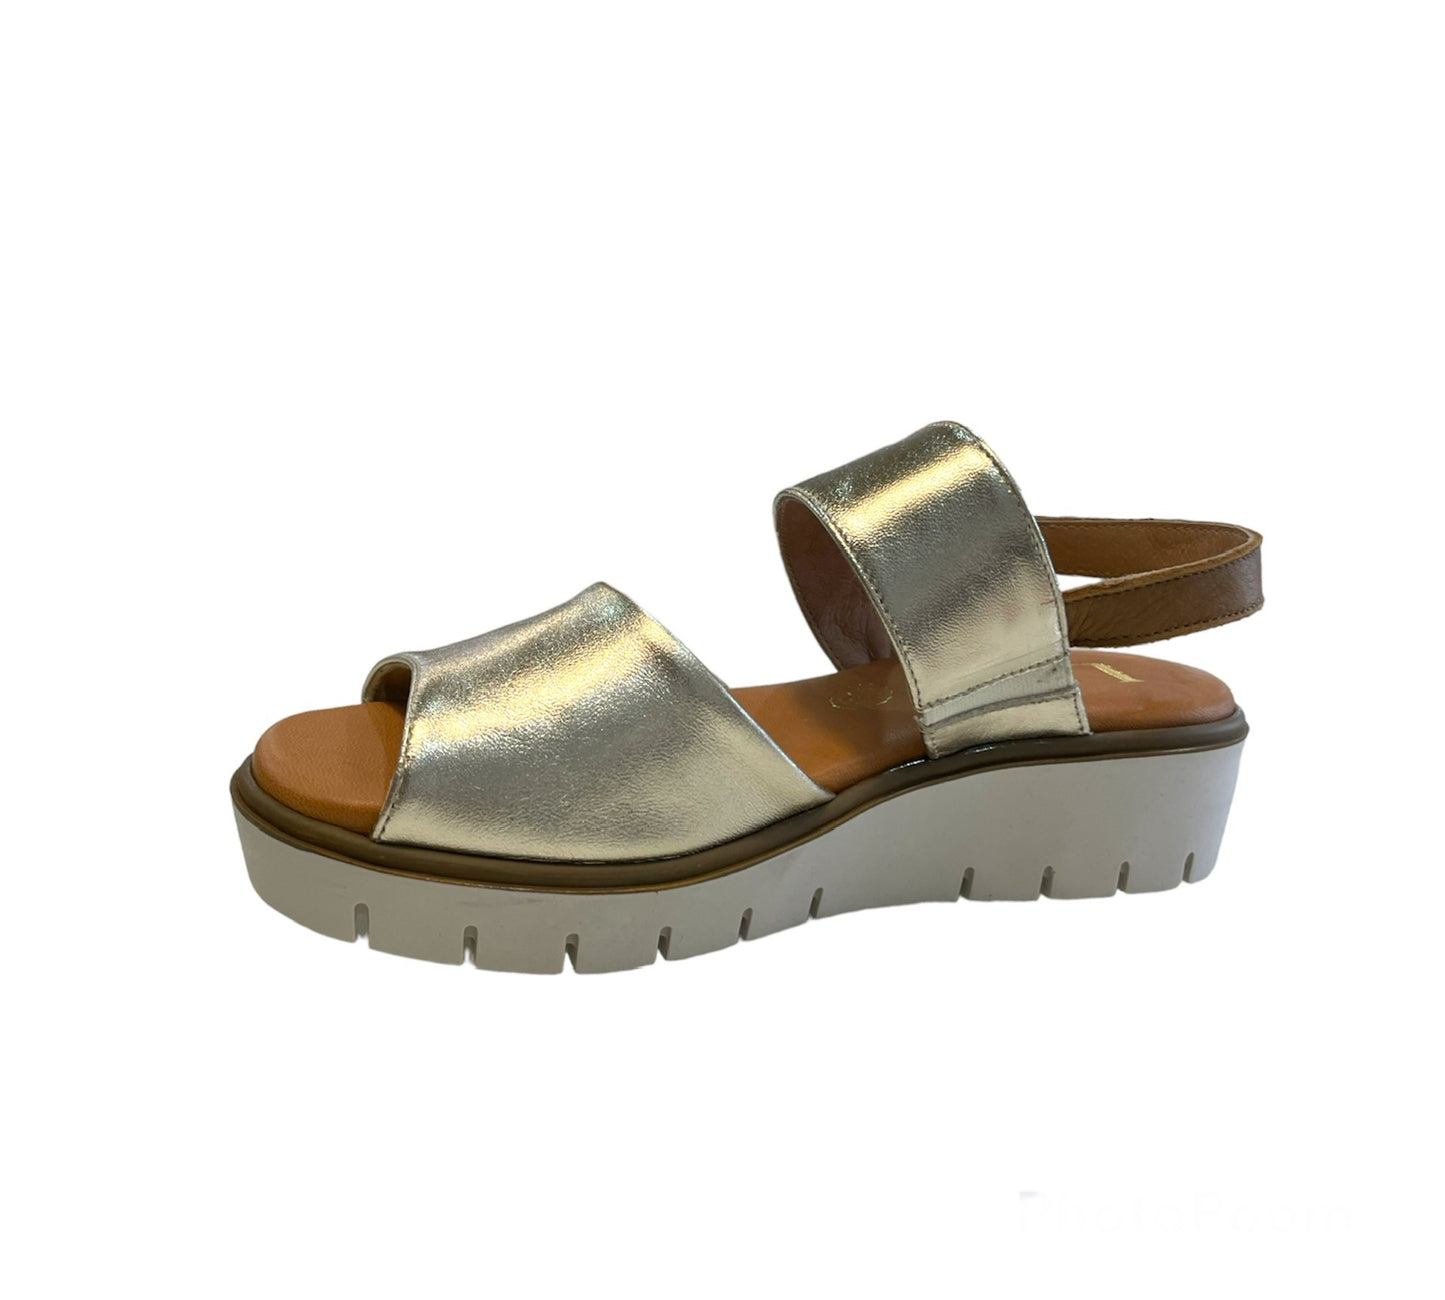 LINCE  13401 oro sandalia confort cuña baja